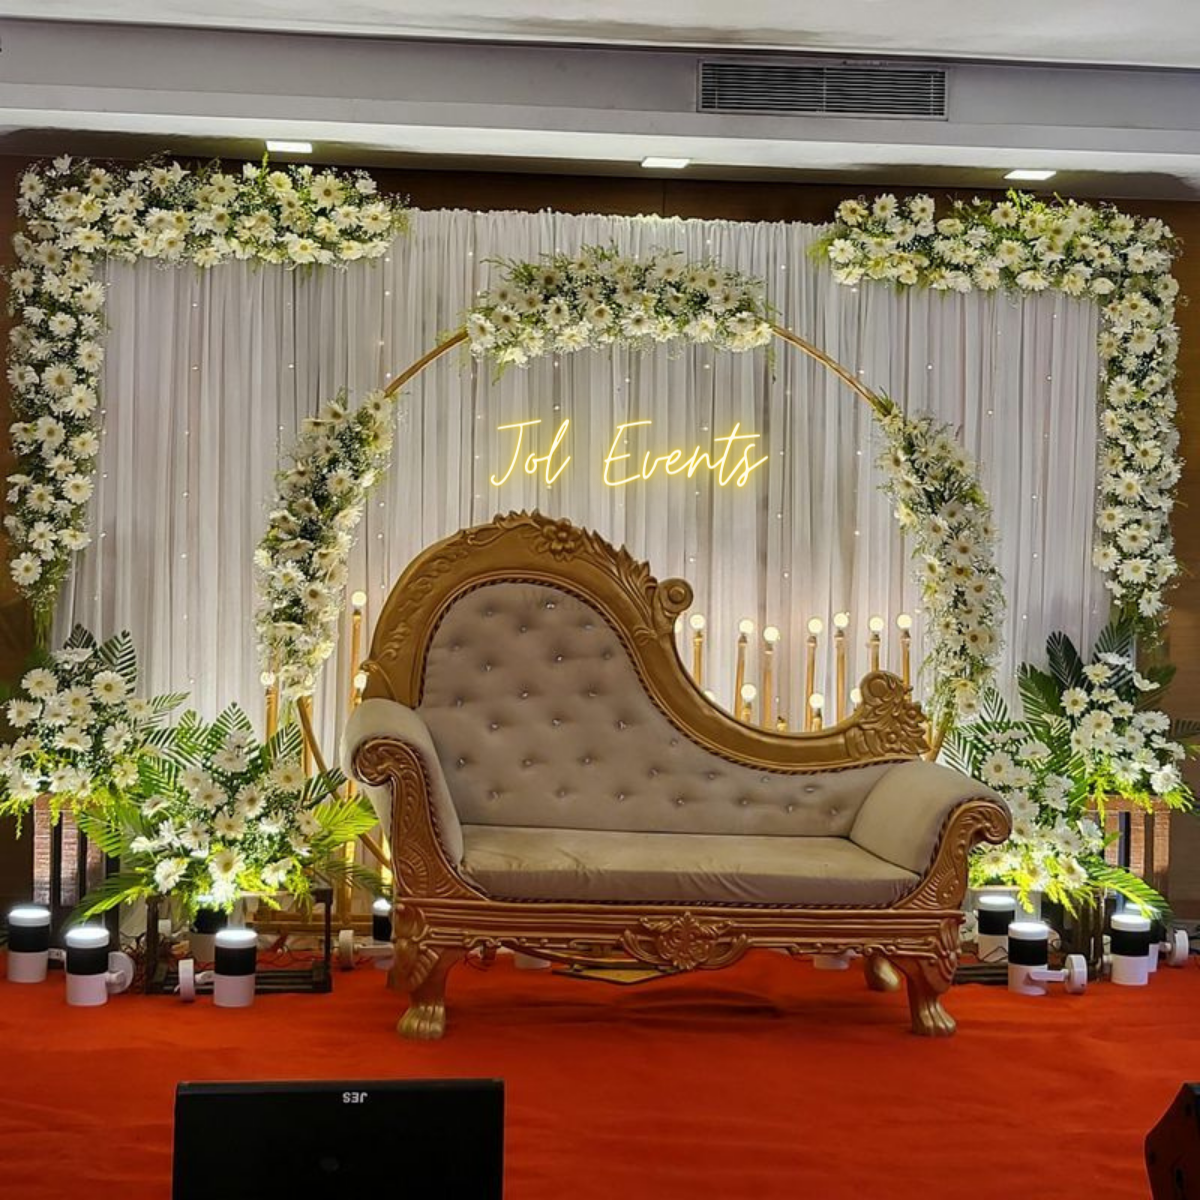 Engagement Decorators in Pune  Ring Ceremony Stage Decoration Pune –  jolevents